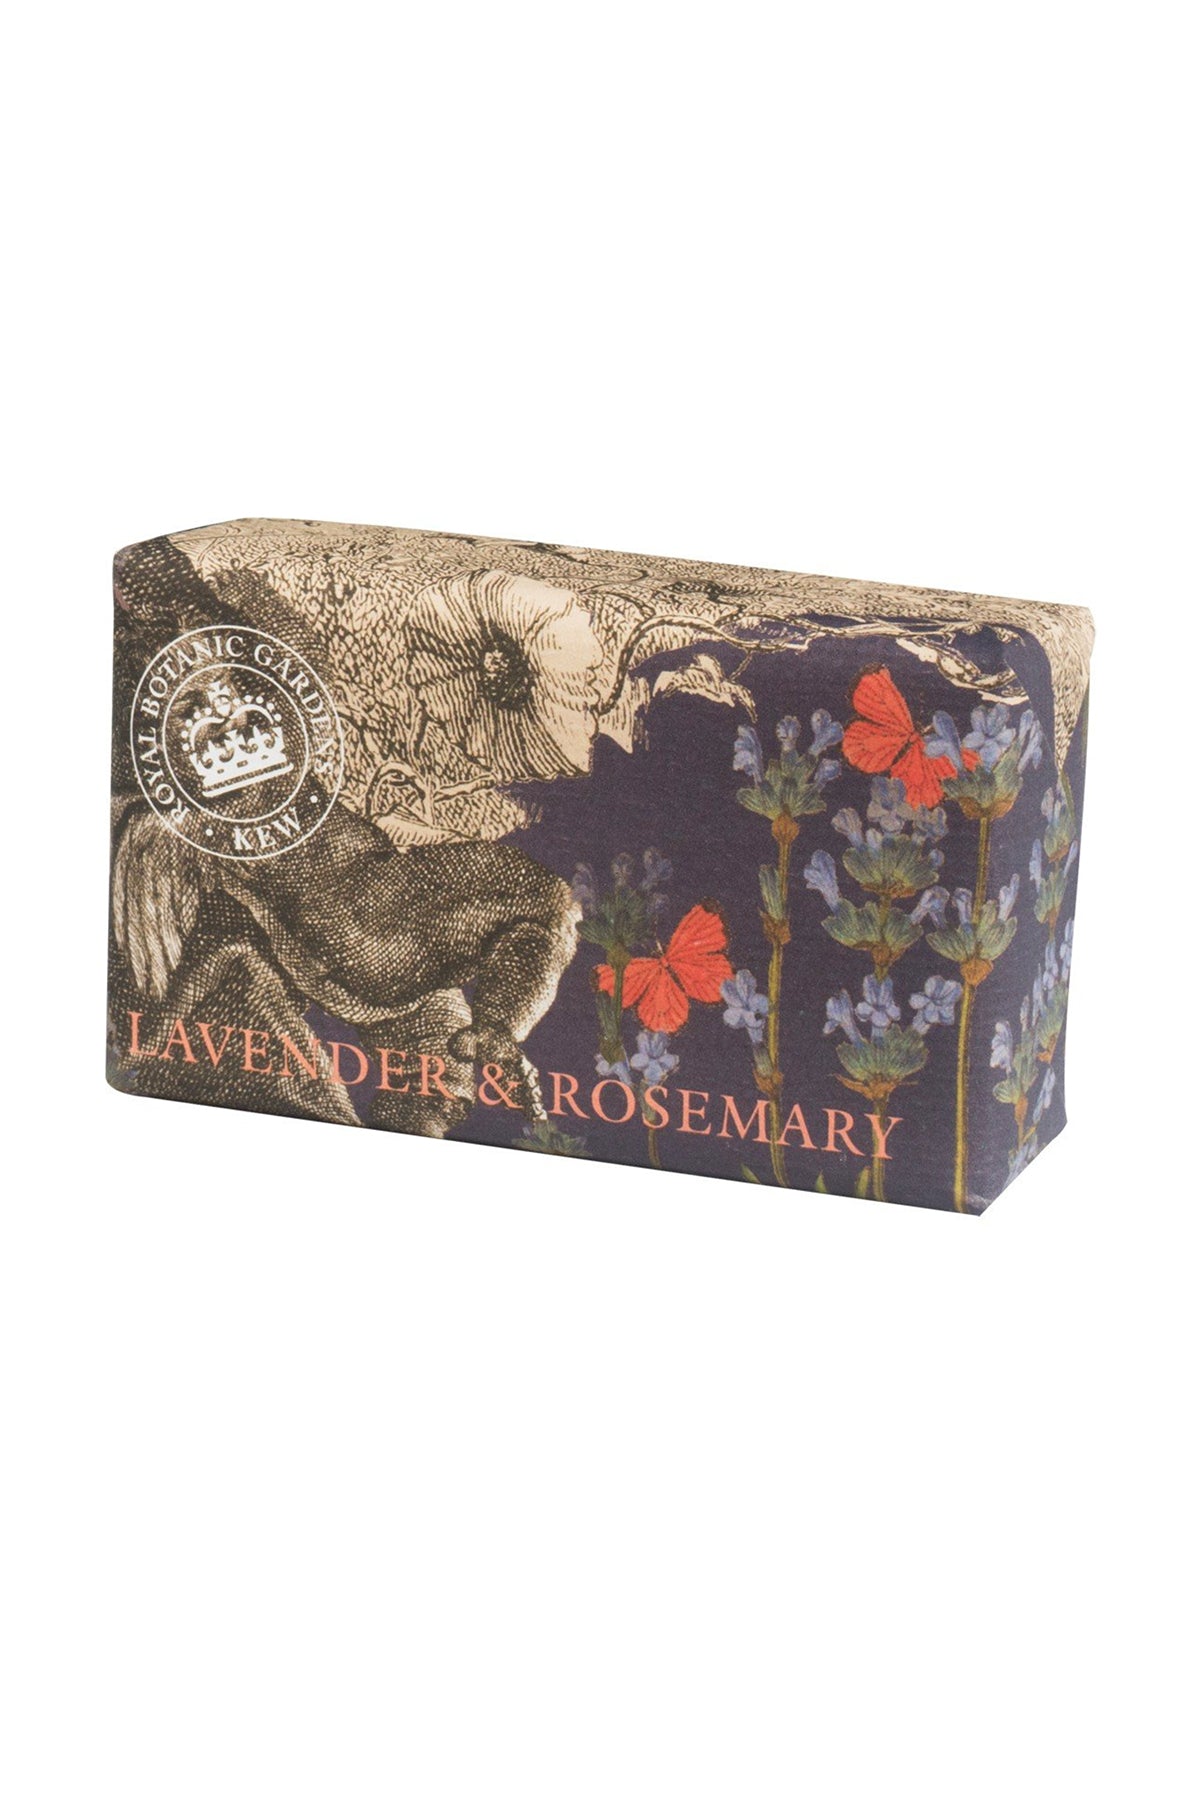 Lavender & Rosemary Soap